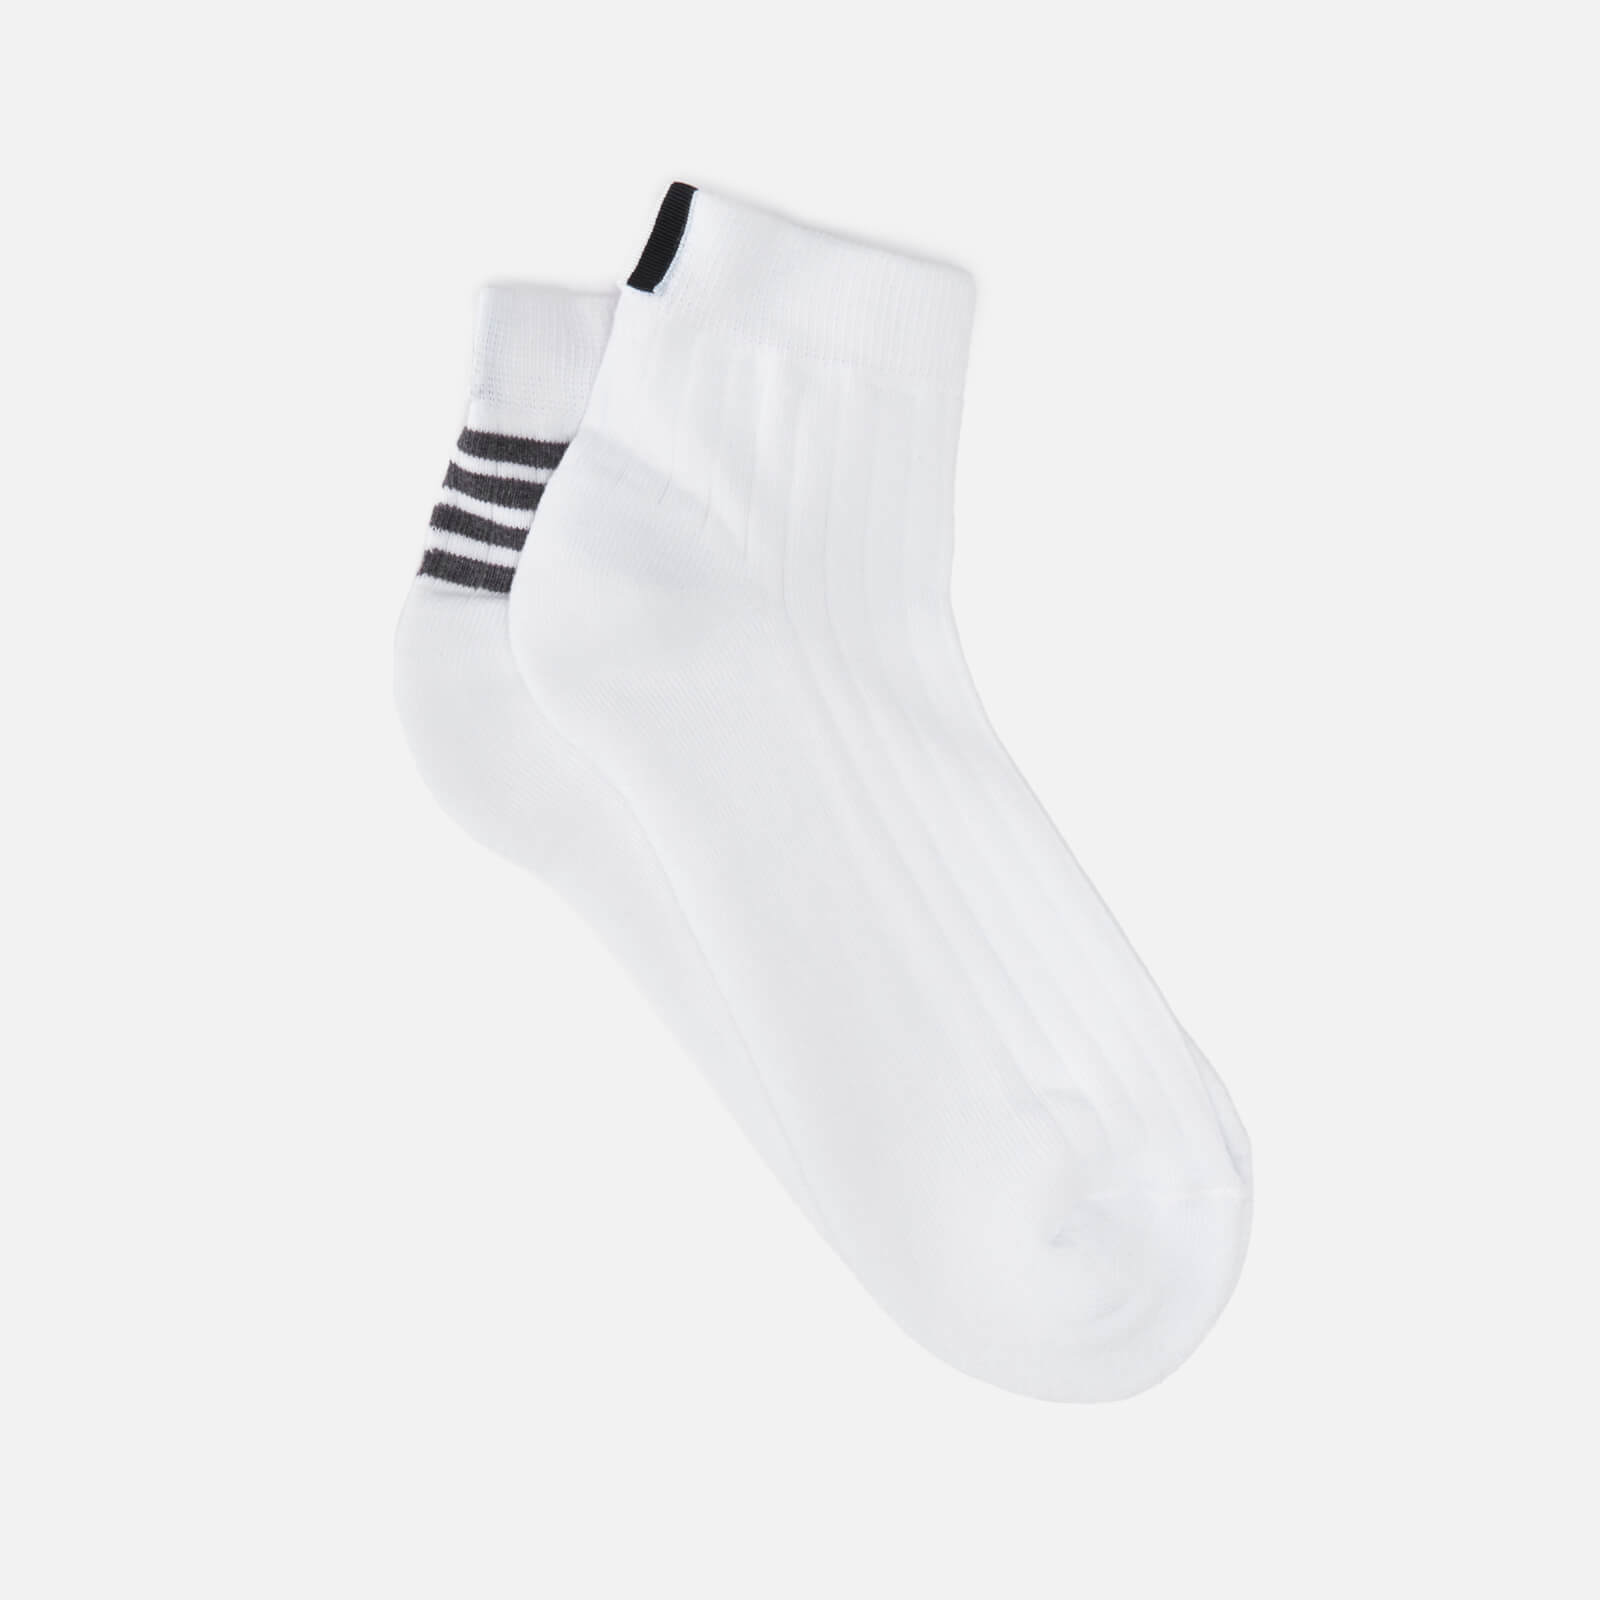 Thom Browne Men's 4-Bar Ankle Socks - Medium Grey